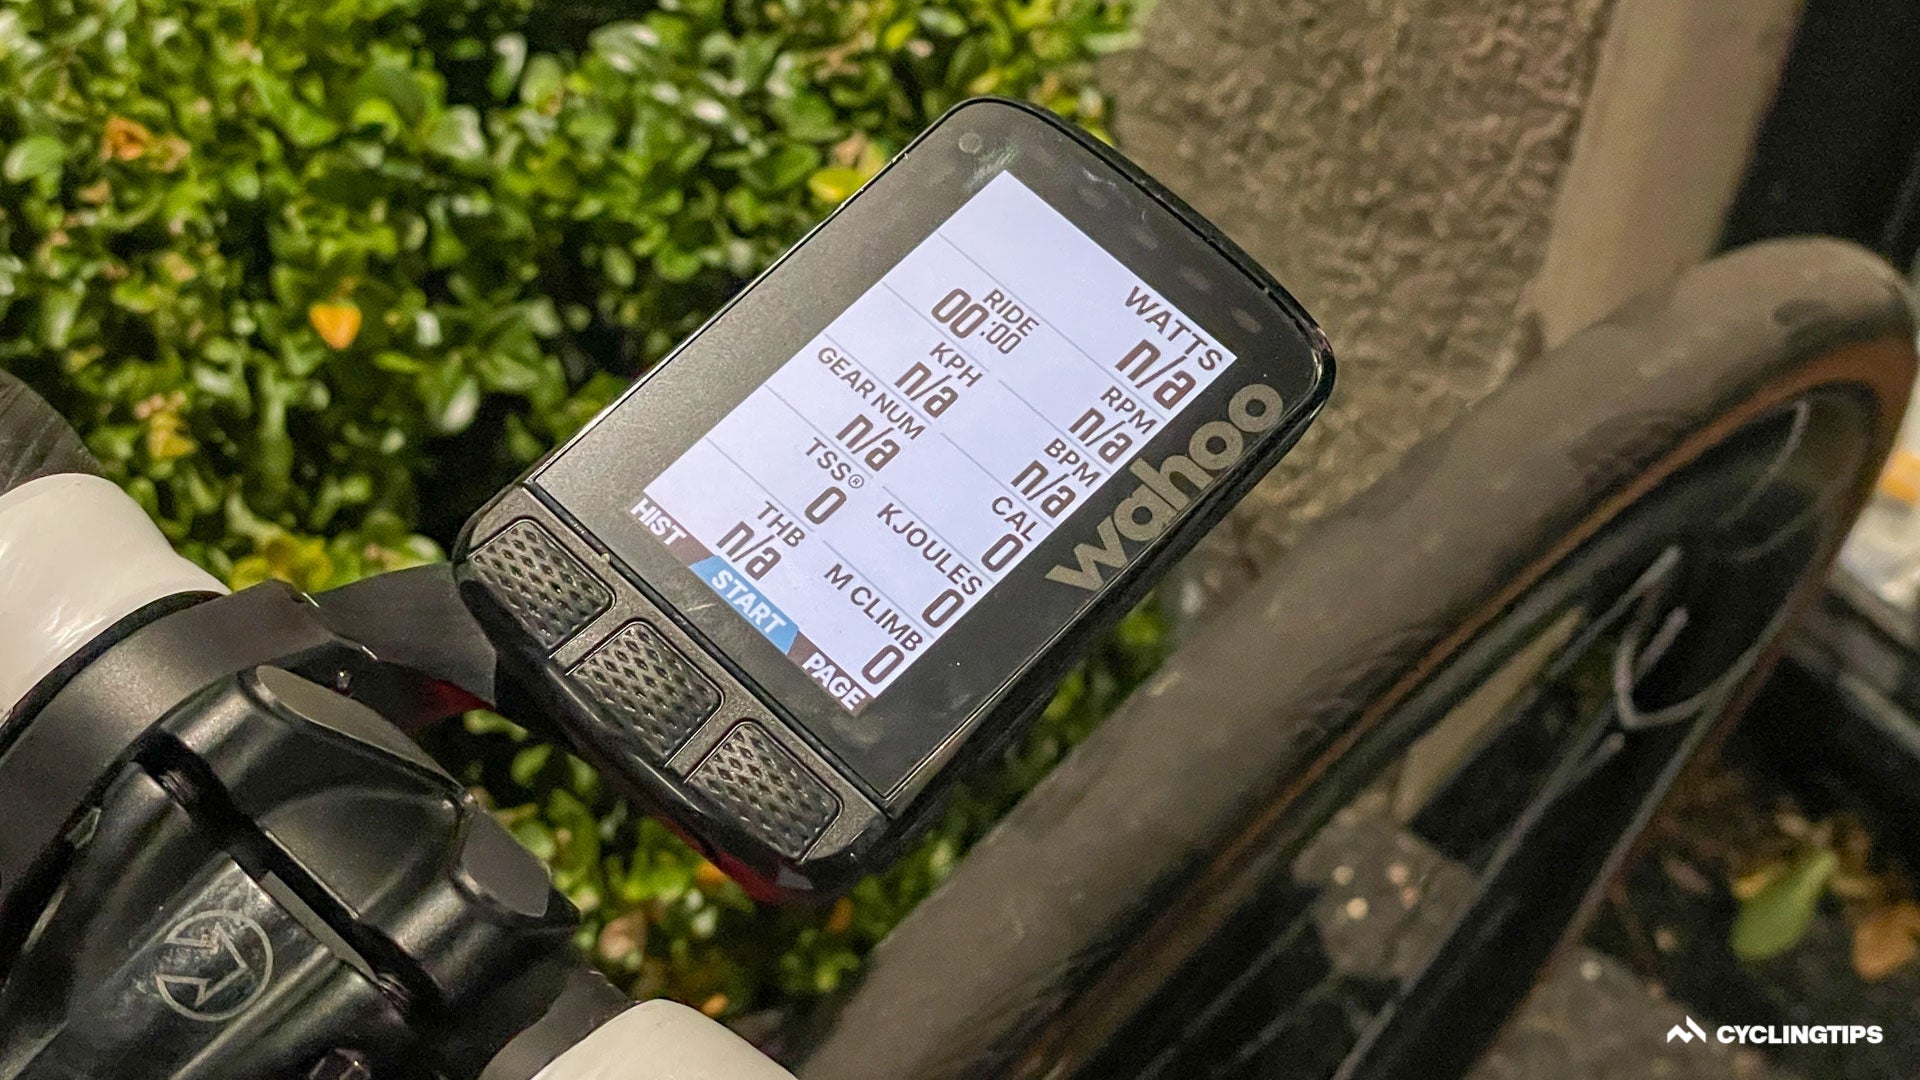 Wahoo Announces ELEMNT ROAM 2 Bike Computer with Dual Band GPS and More  Colors - SMART Bike Trainers